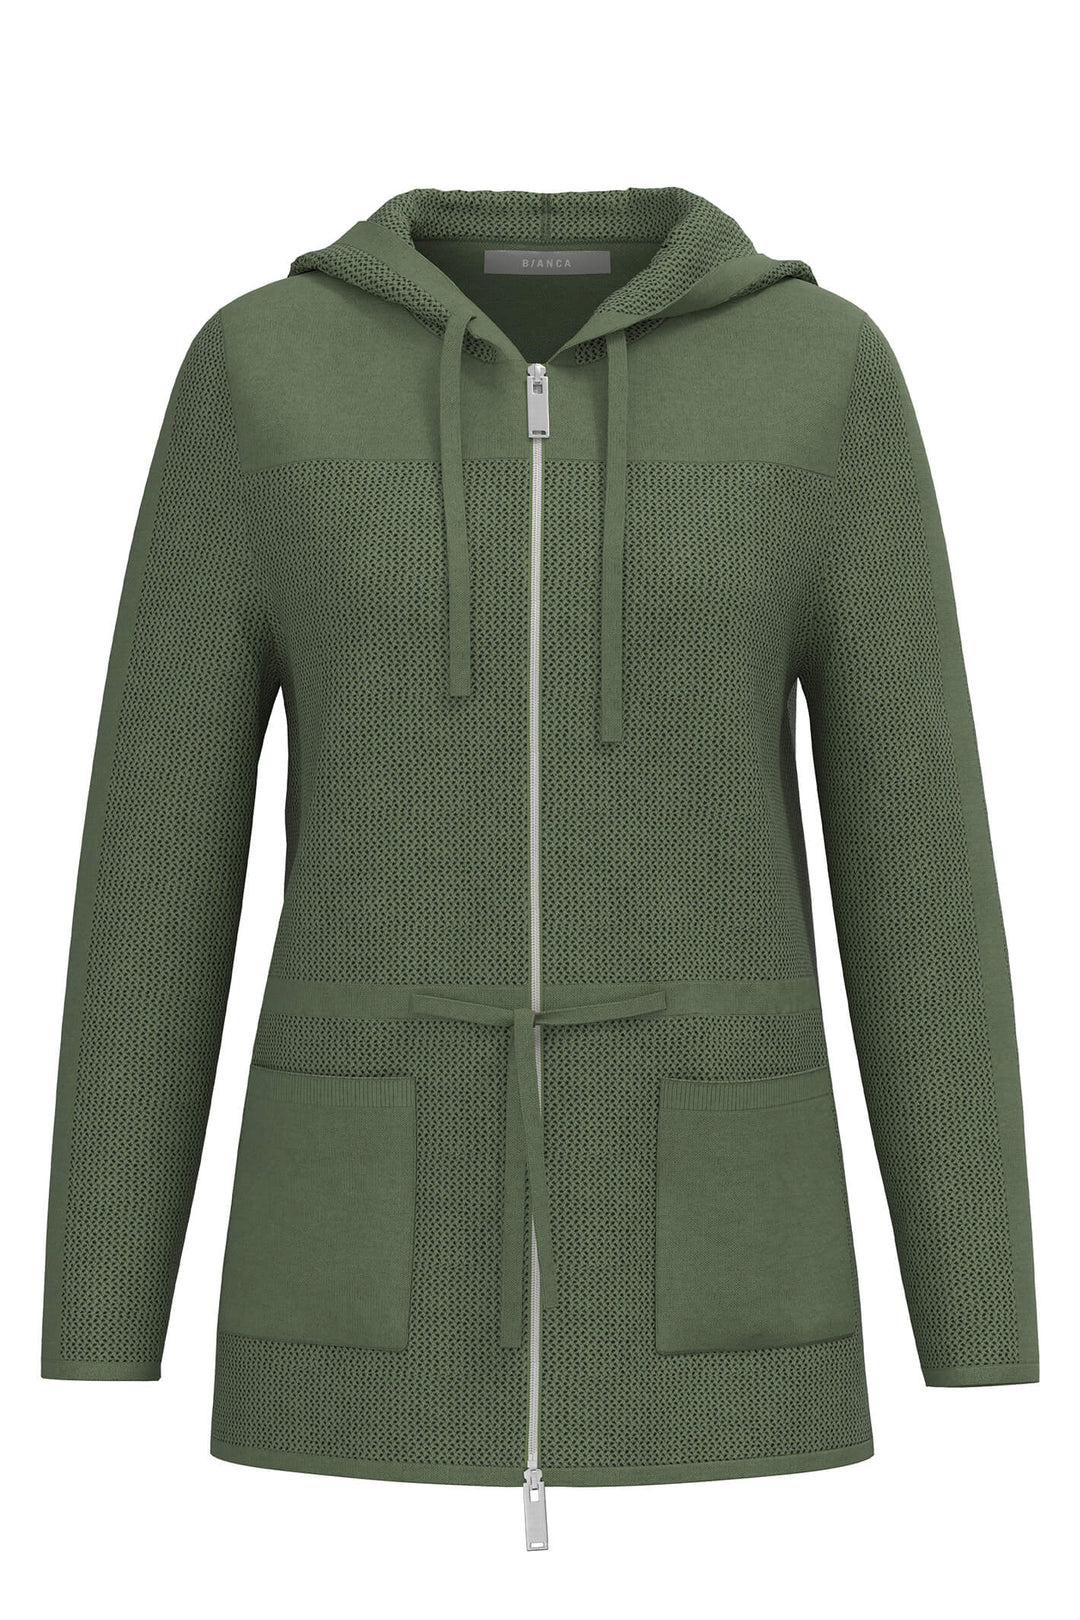 Bianca 88002 Samaris Safari Green Zip Front Knit Jacket With Hood - Shirley Allum Boutique